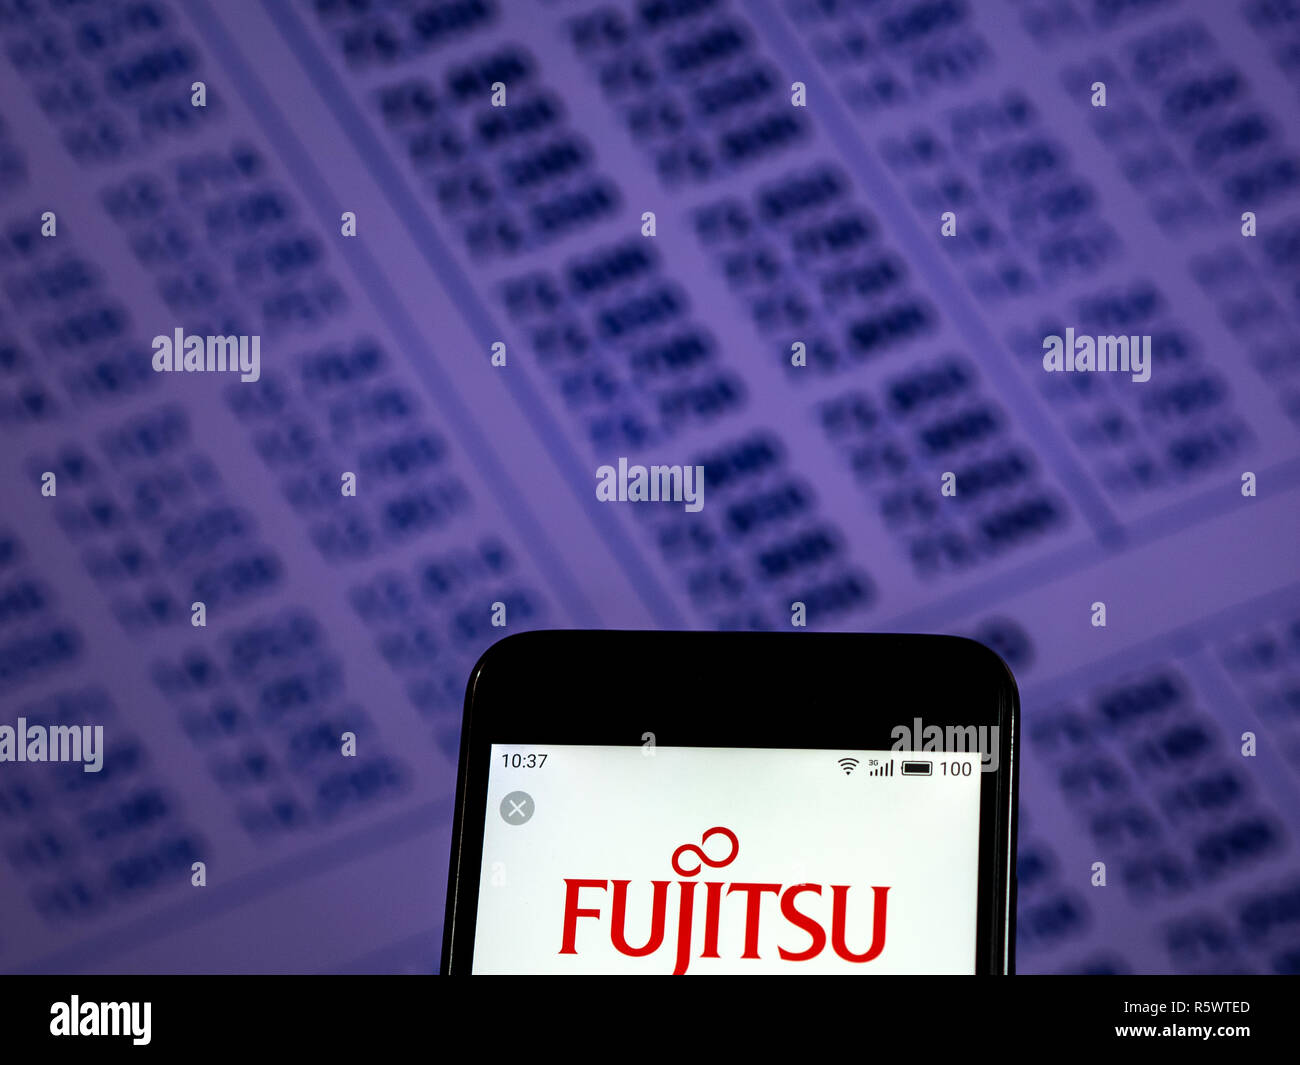 Fujitsu Personal computer equipment company logo seen displayed on smart phone. Stock Photo